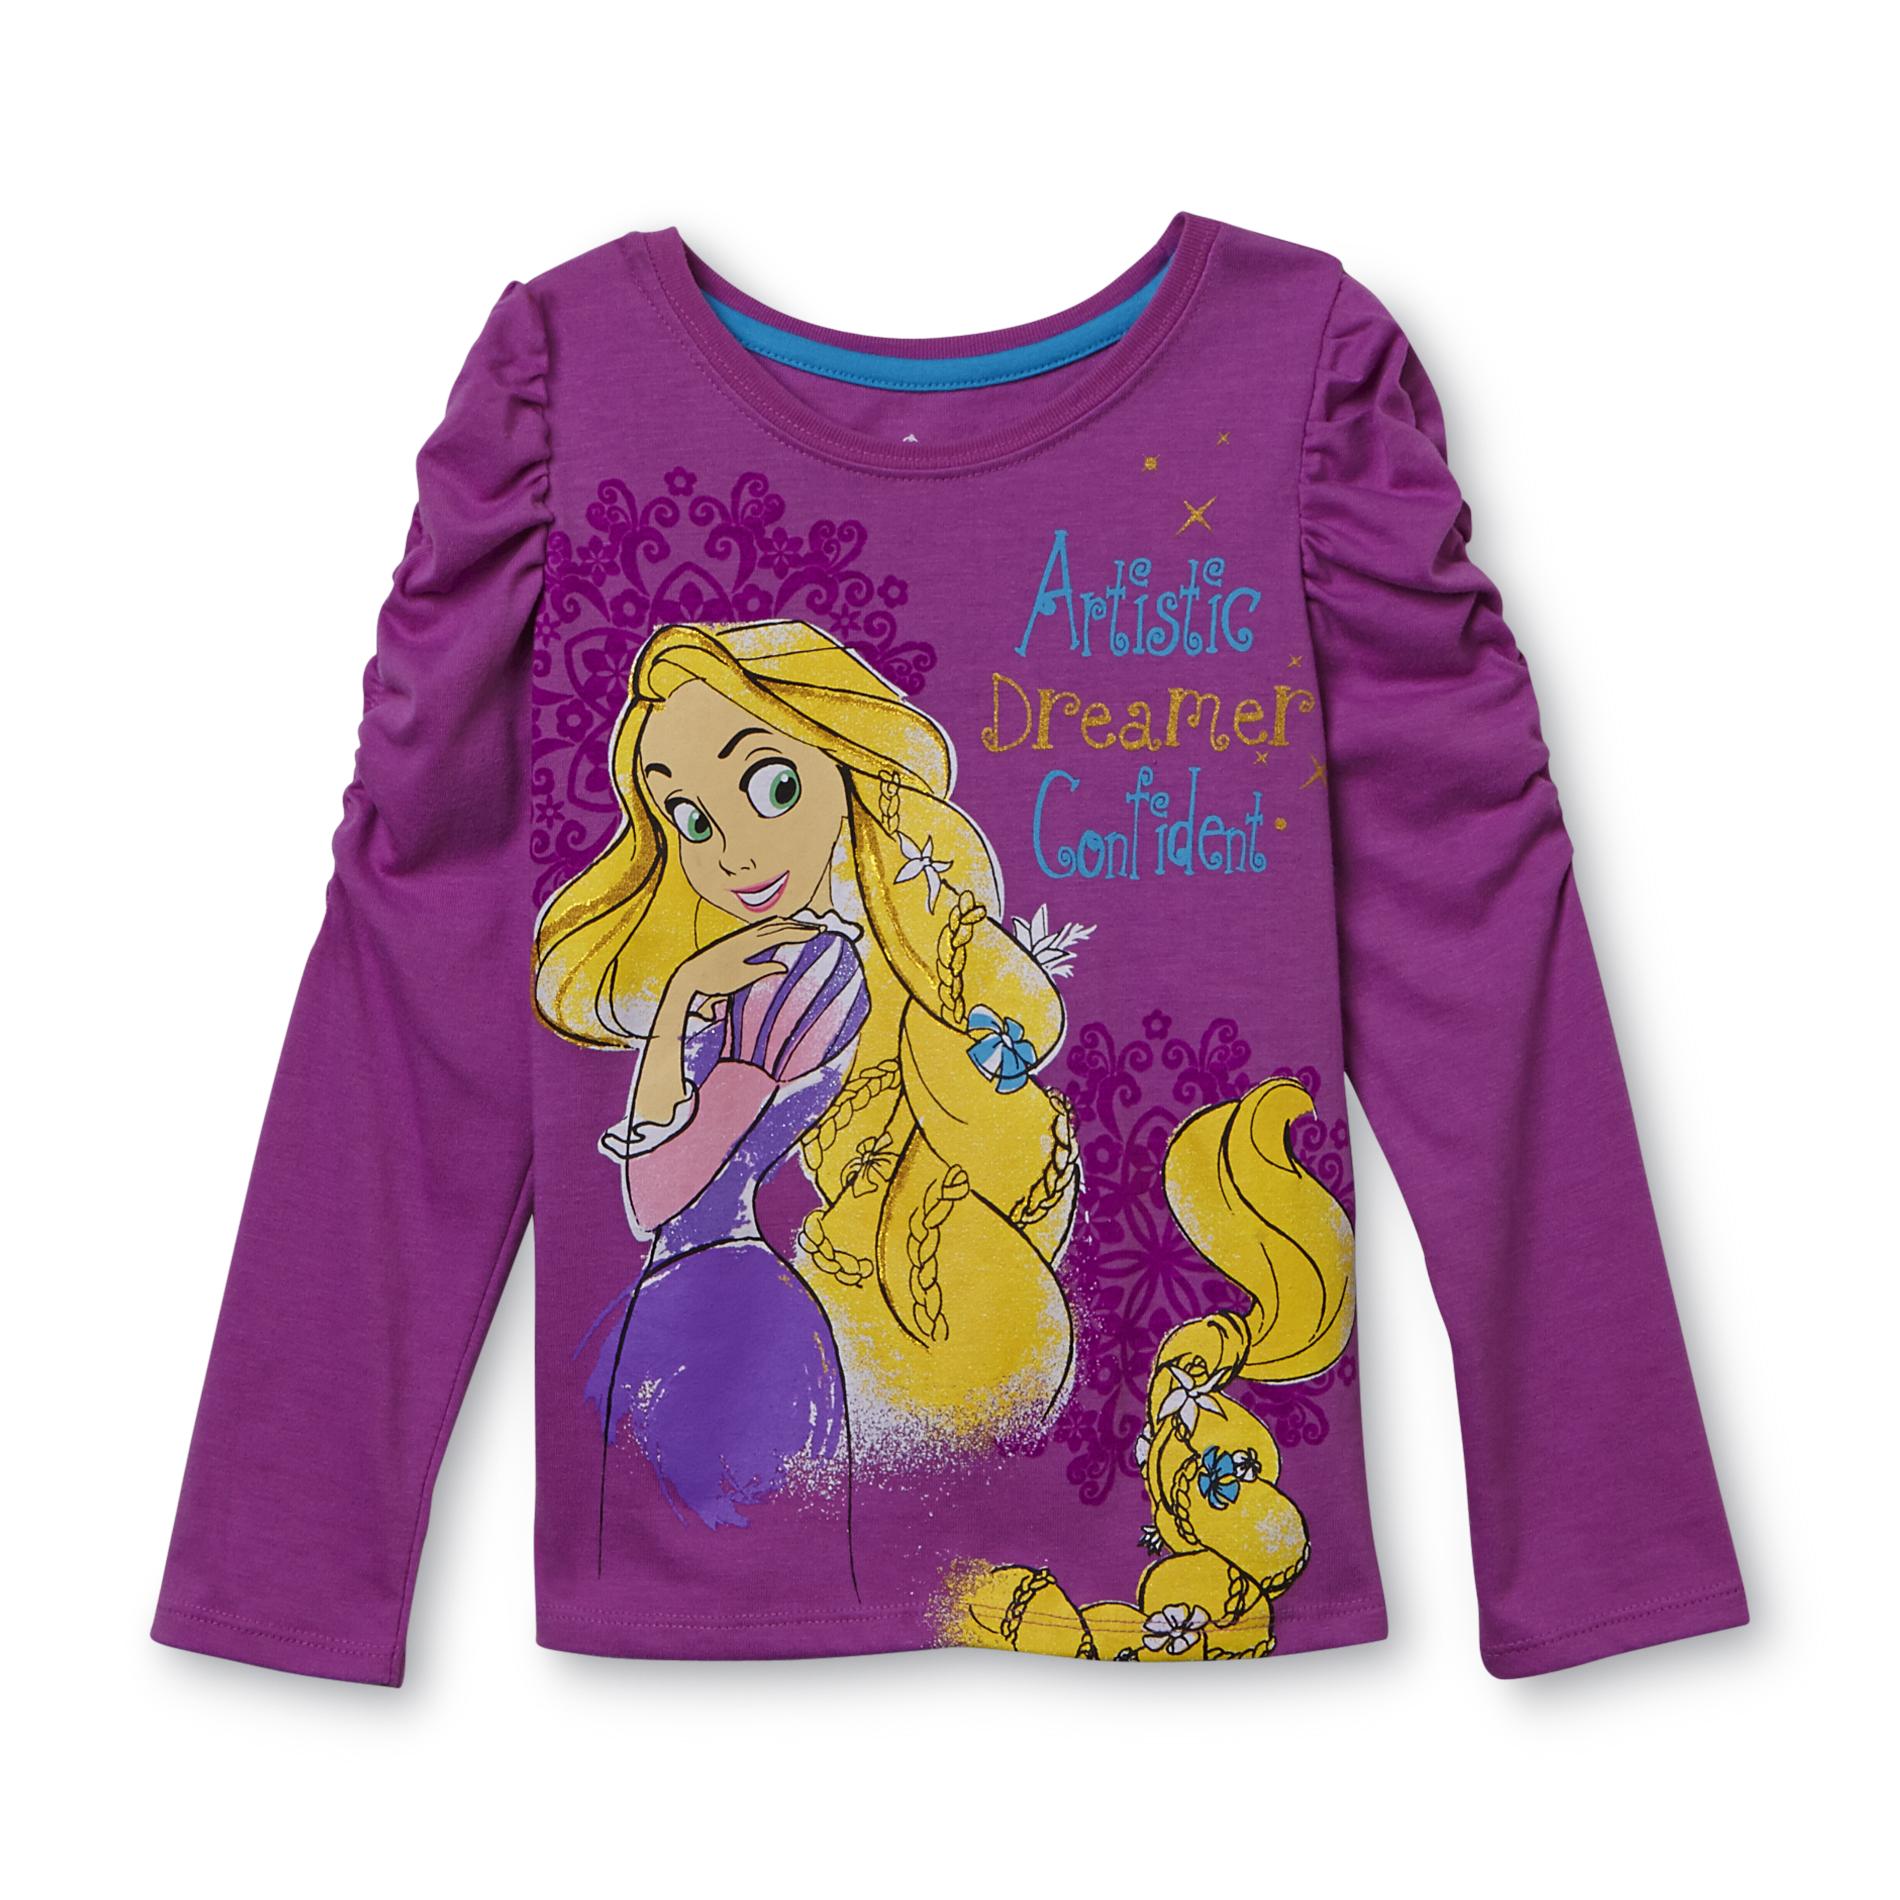 Disney Princess Girl's Graphic T-Shirt - Rapunzel